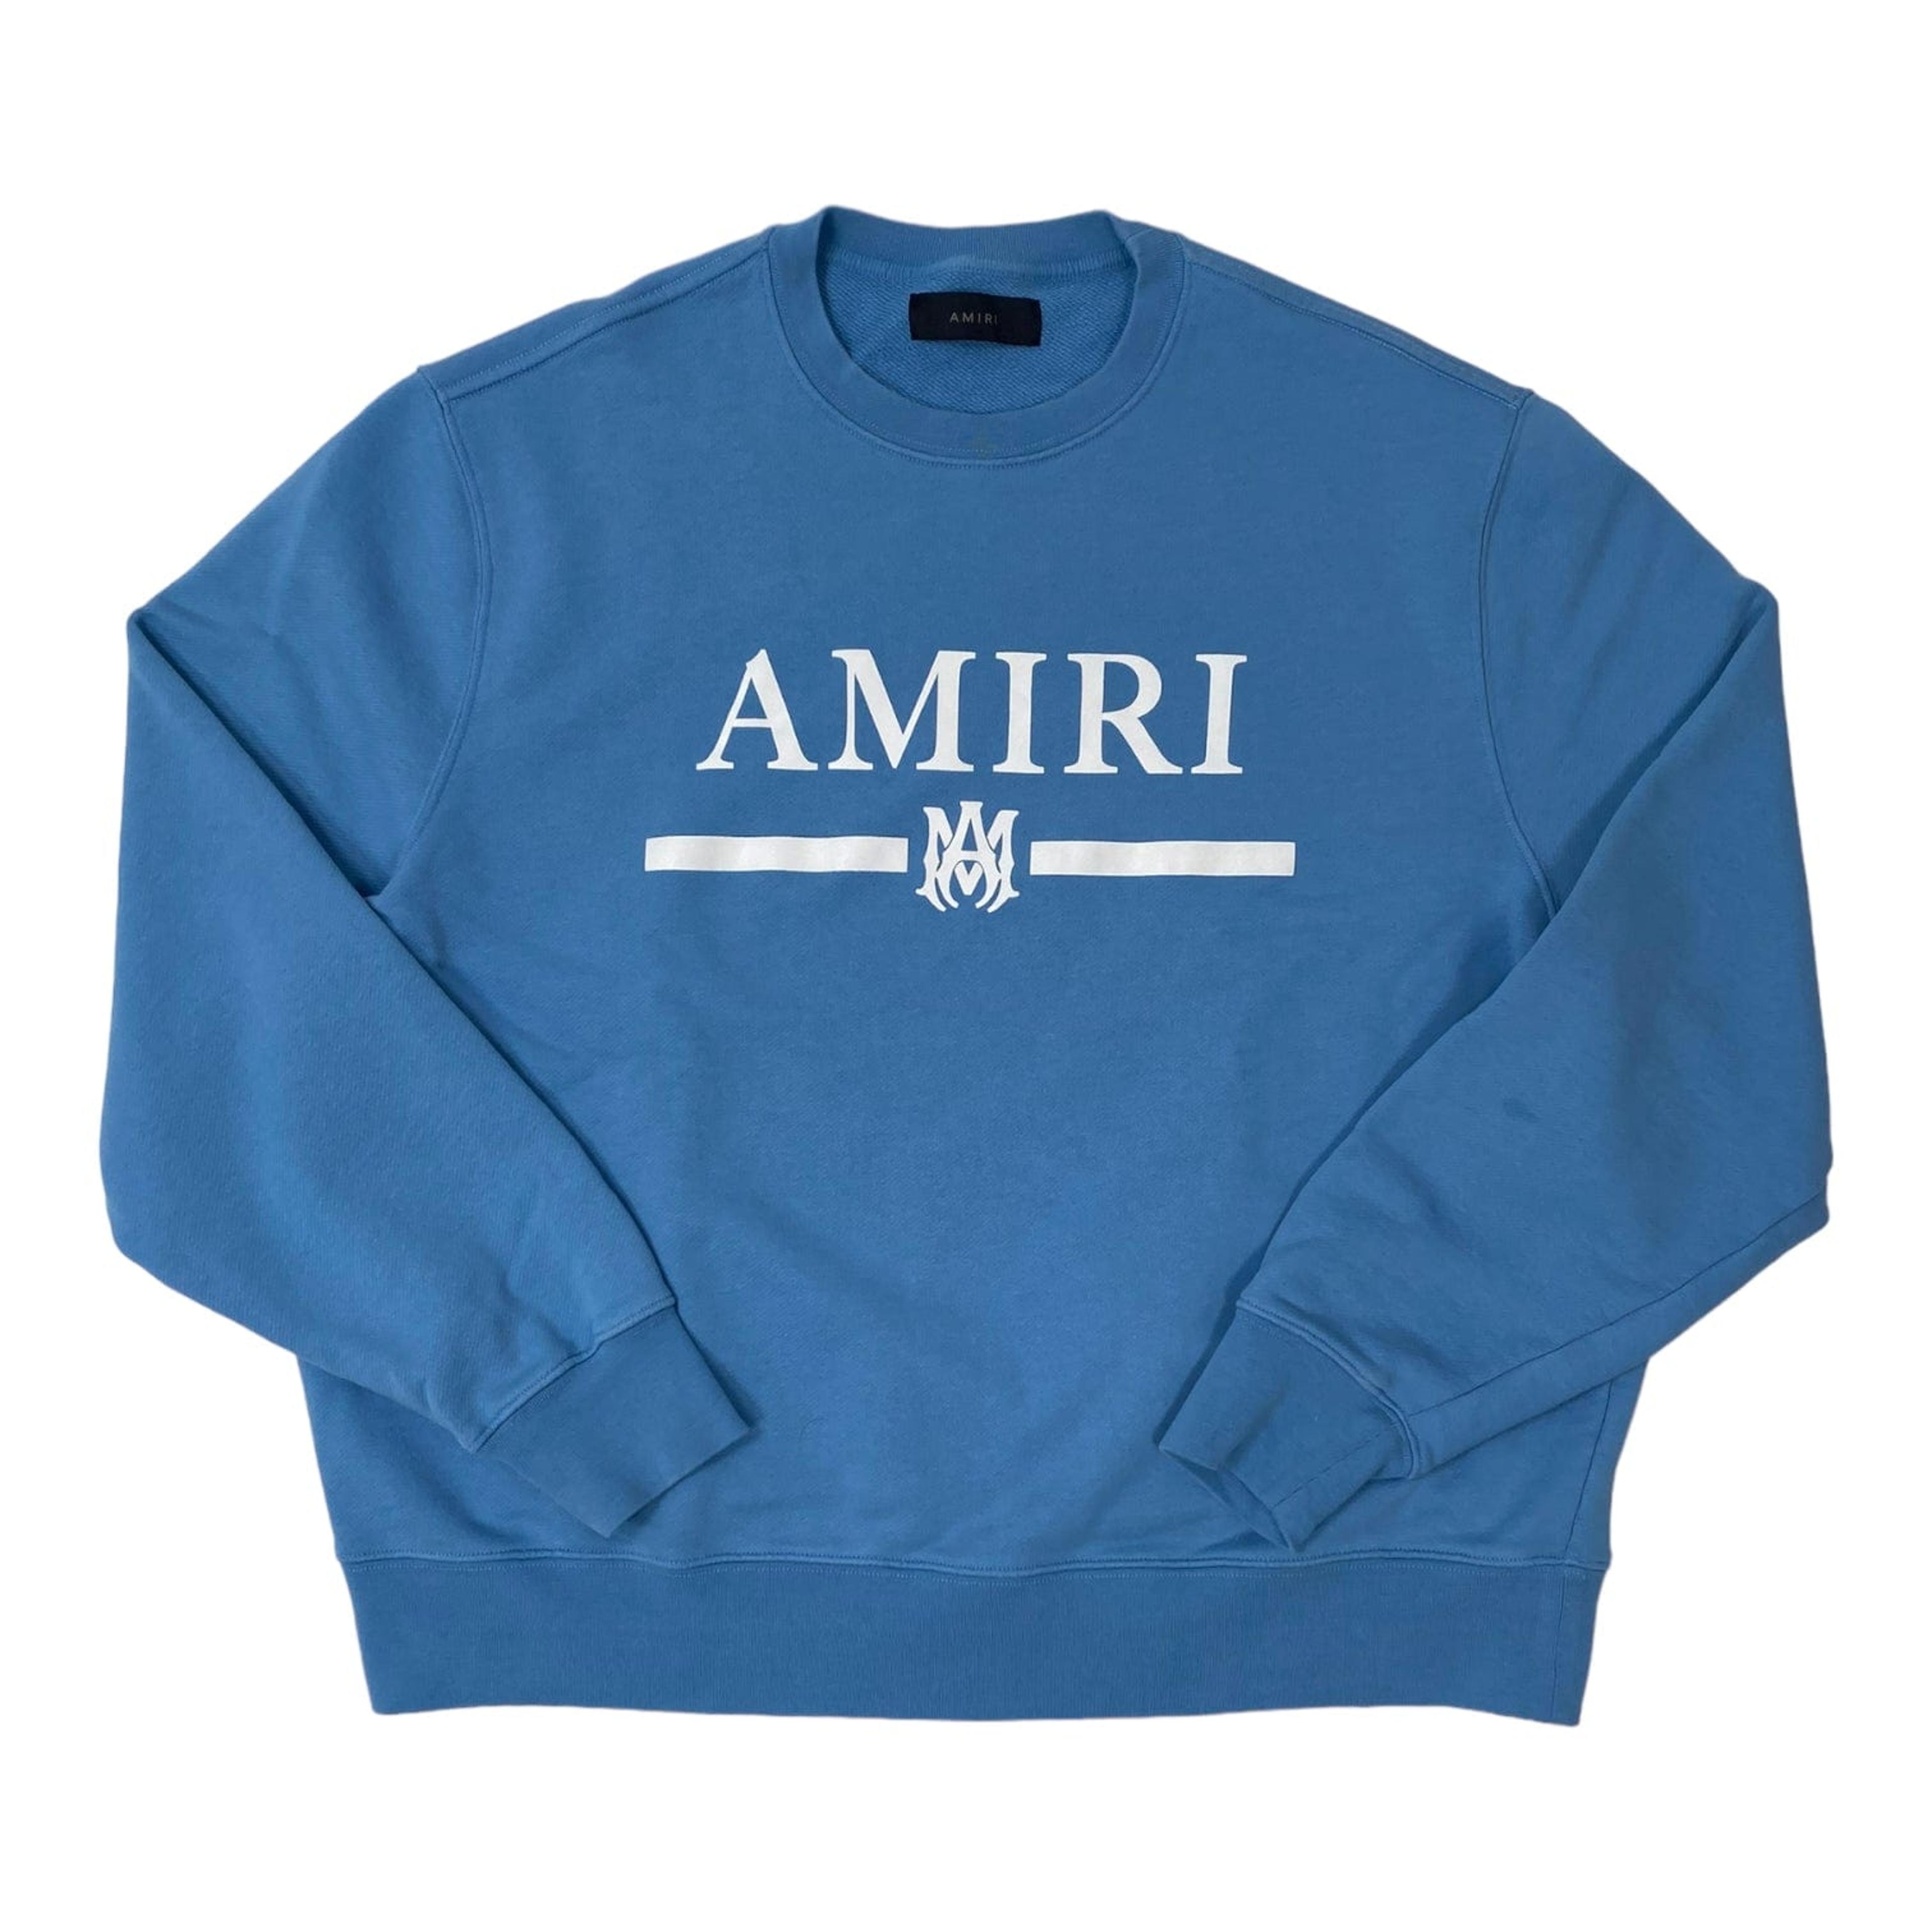 Amiri M.A. Bar Crewneck Sweatshirt Carolina Blue Pre-Owned